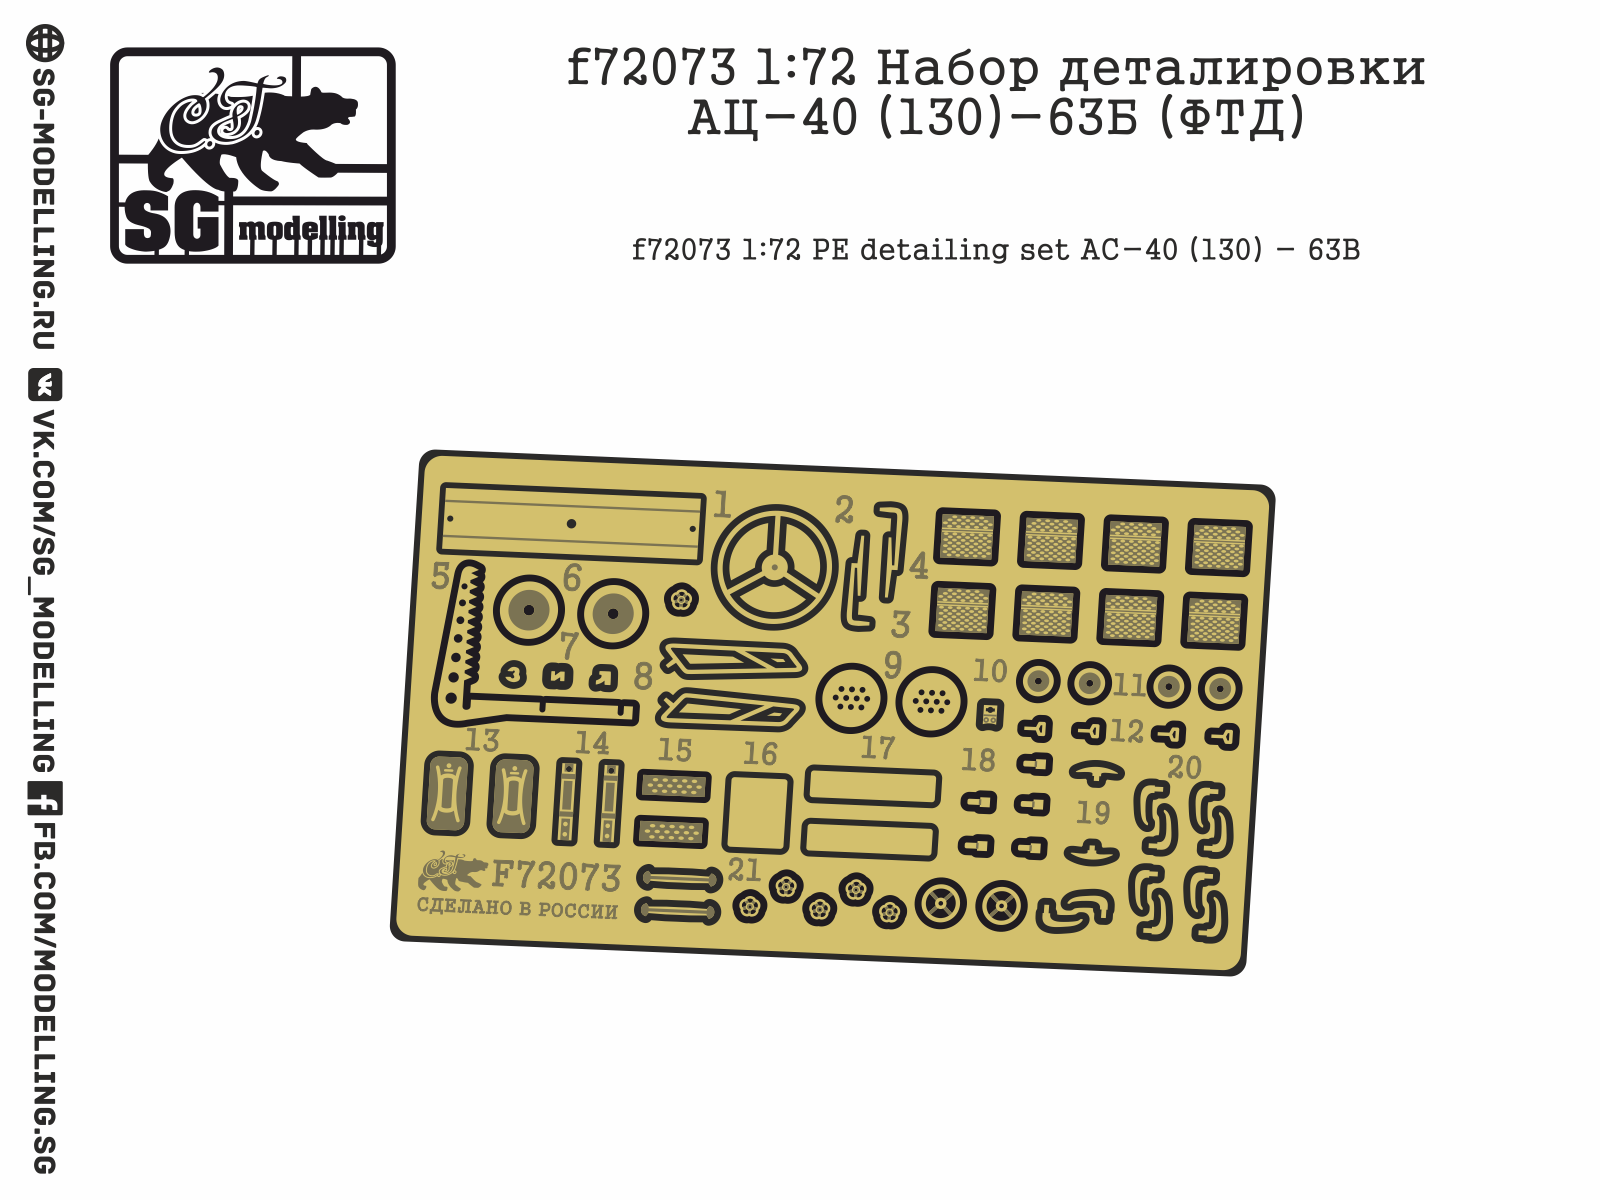 AC-40 (130) - 63B (AVD)